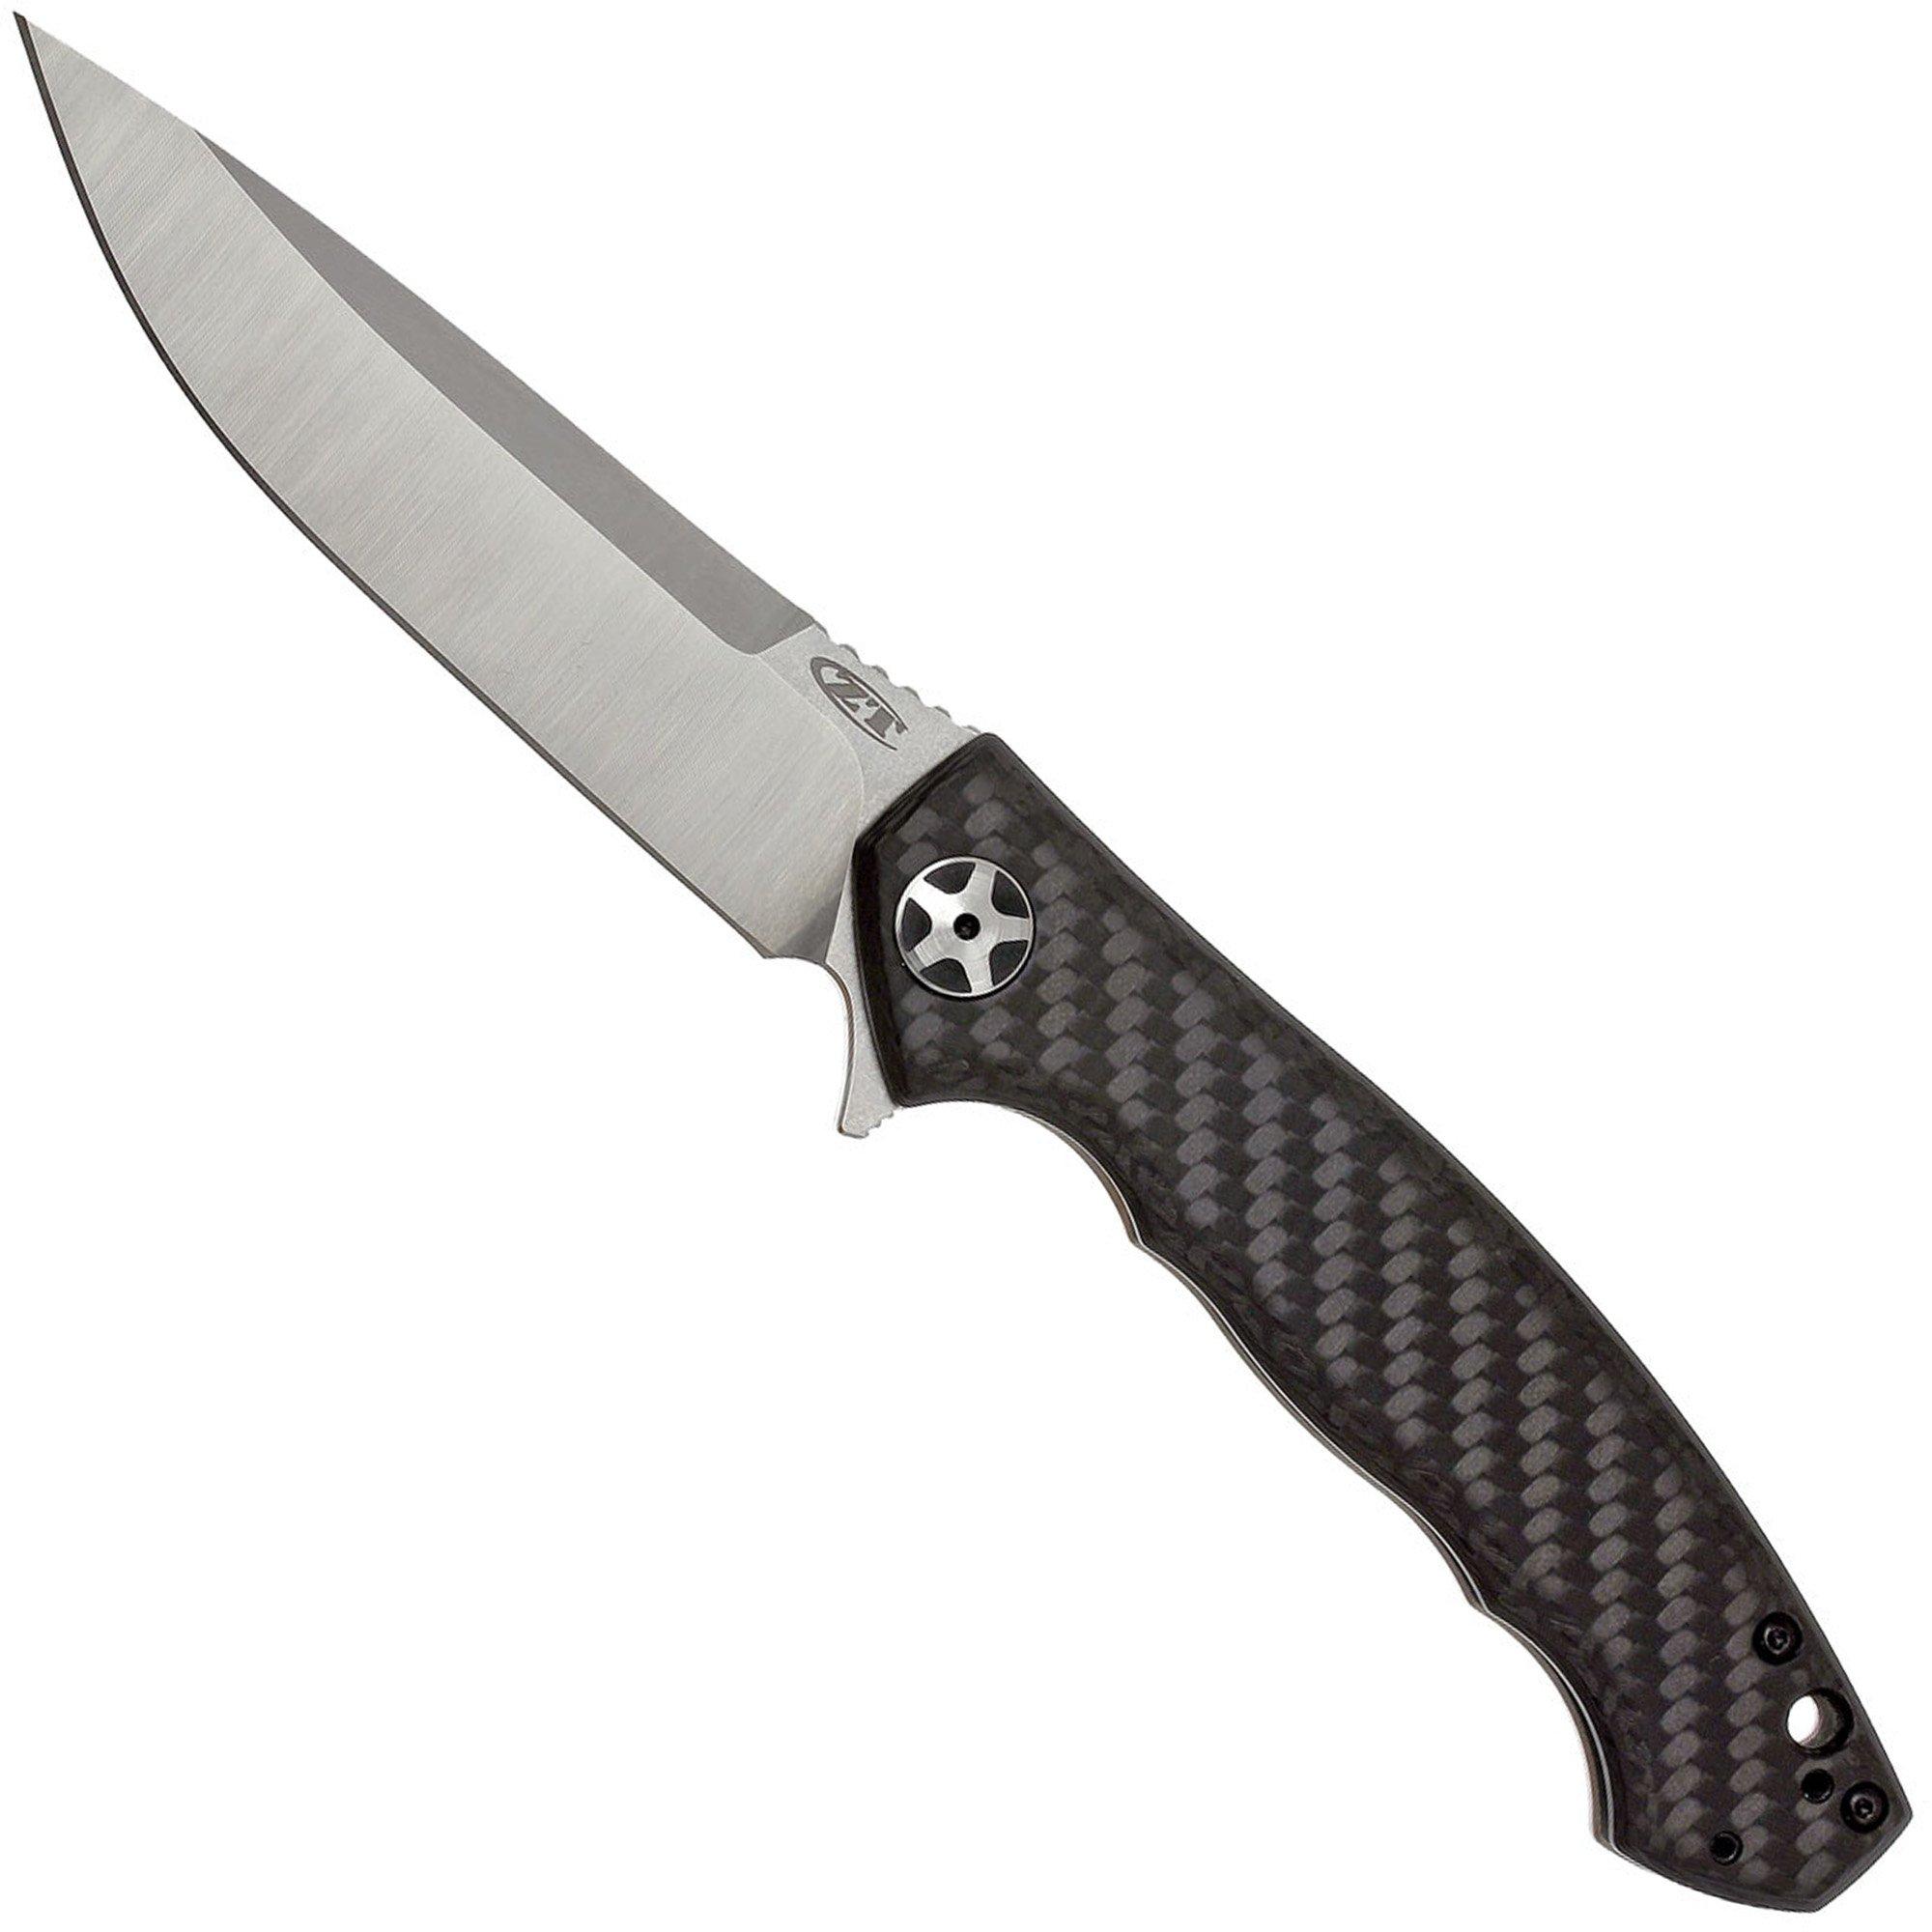 Zero Tolerance 0235 slipjoint pocket knife, Jens Anso design 